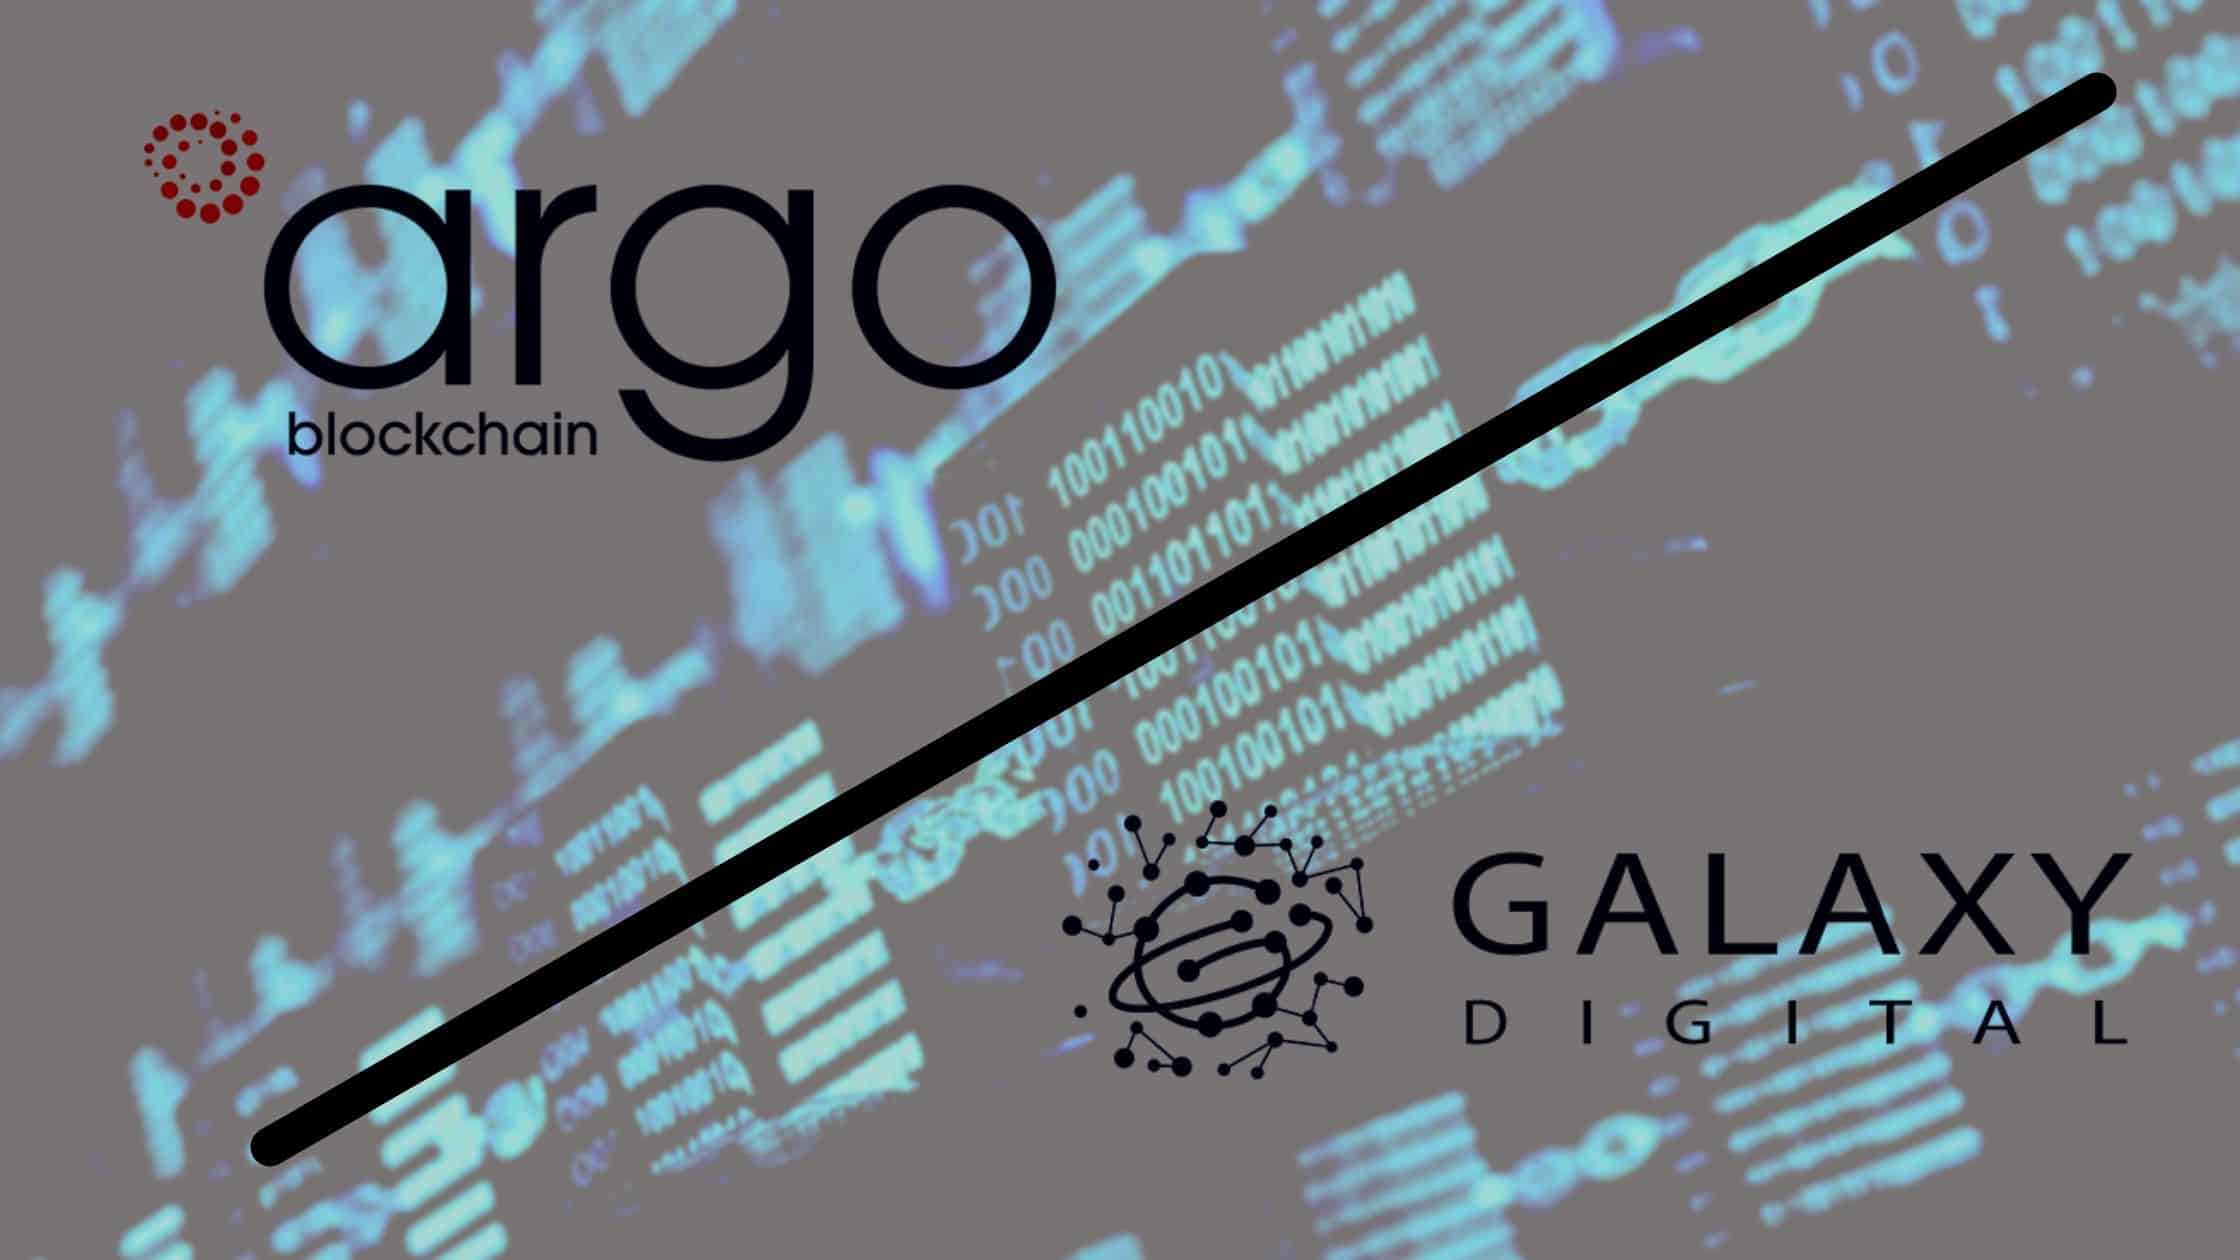 Argo Blockchain Sells Galaxy Digital Its Top Mining Facility For $65 Million